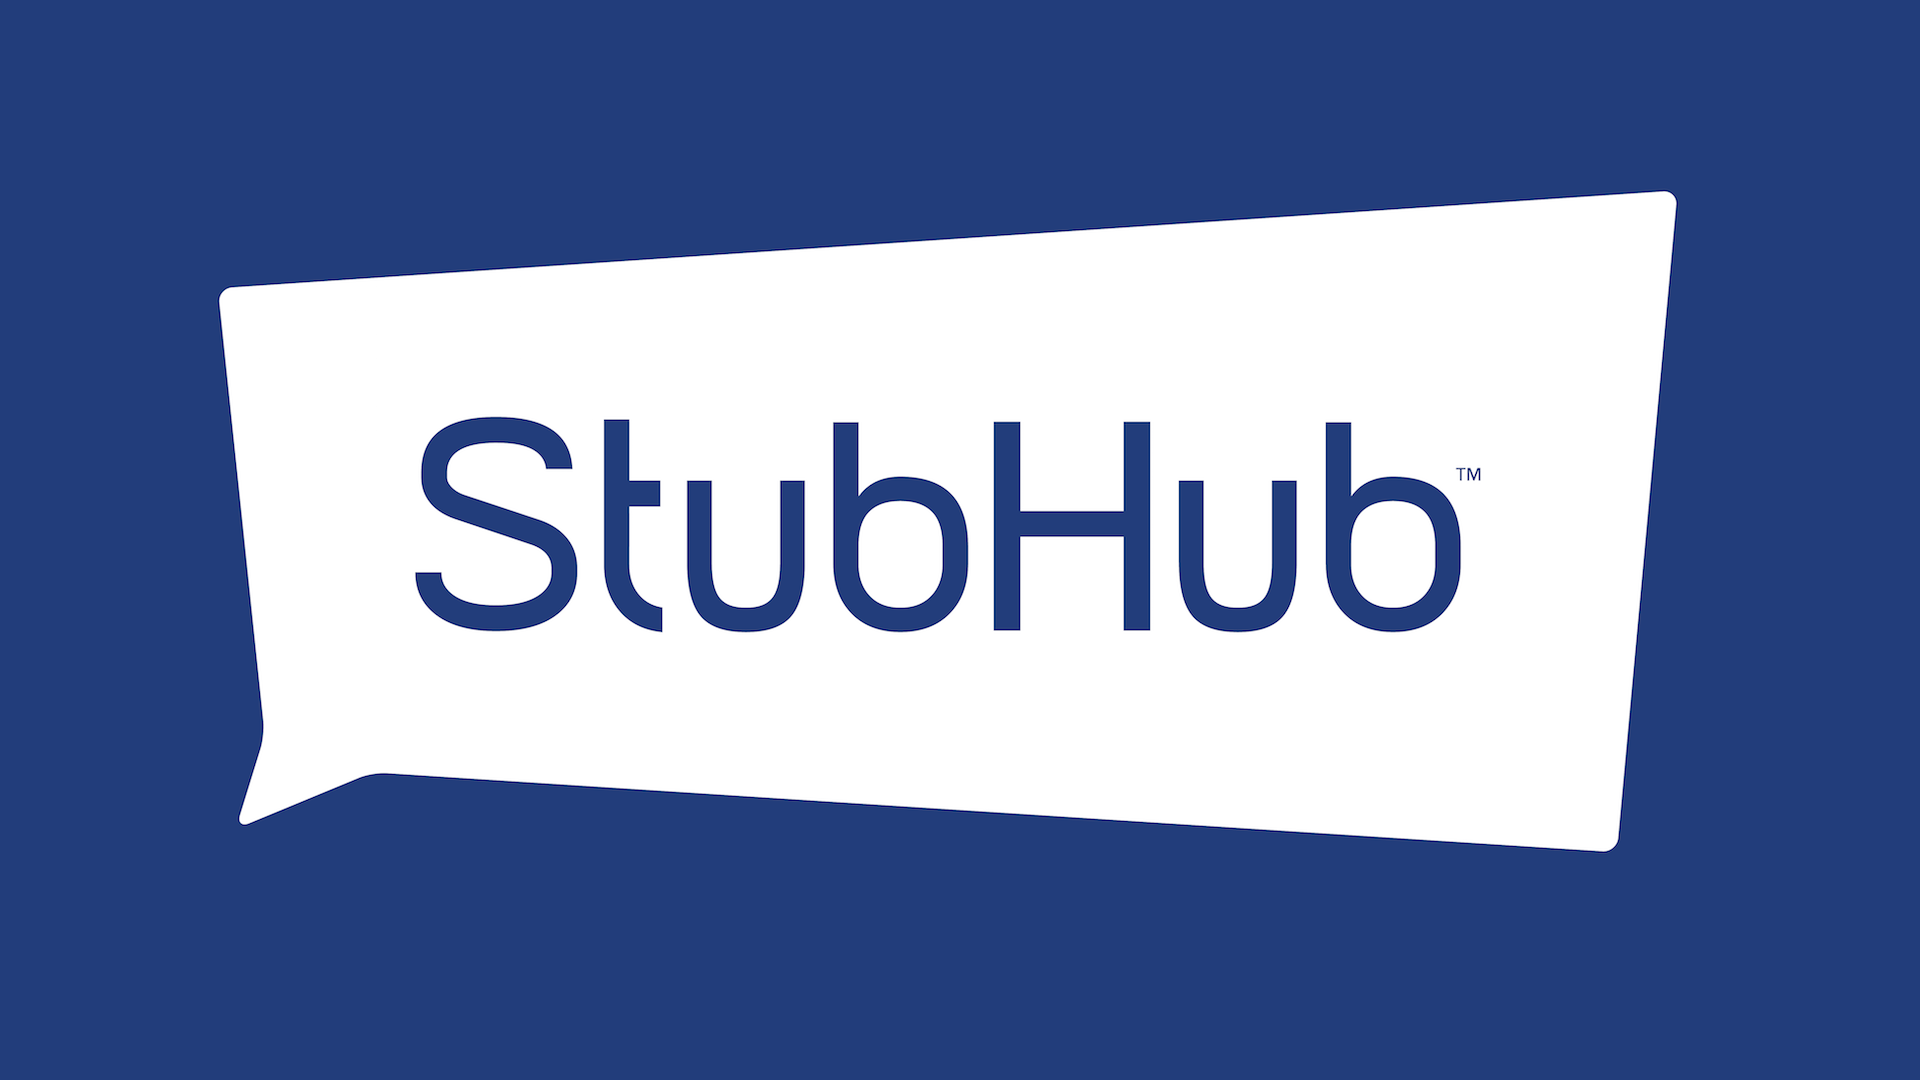 StubHub: Your Gateway to Live Event Experiences